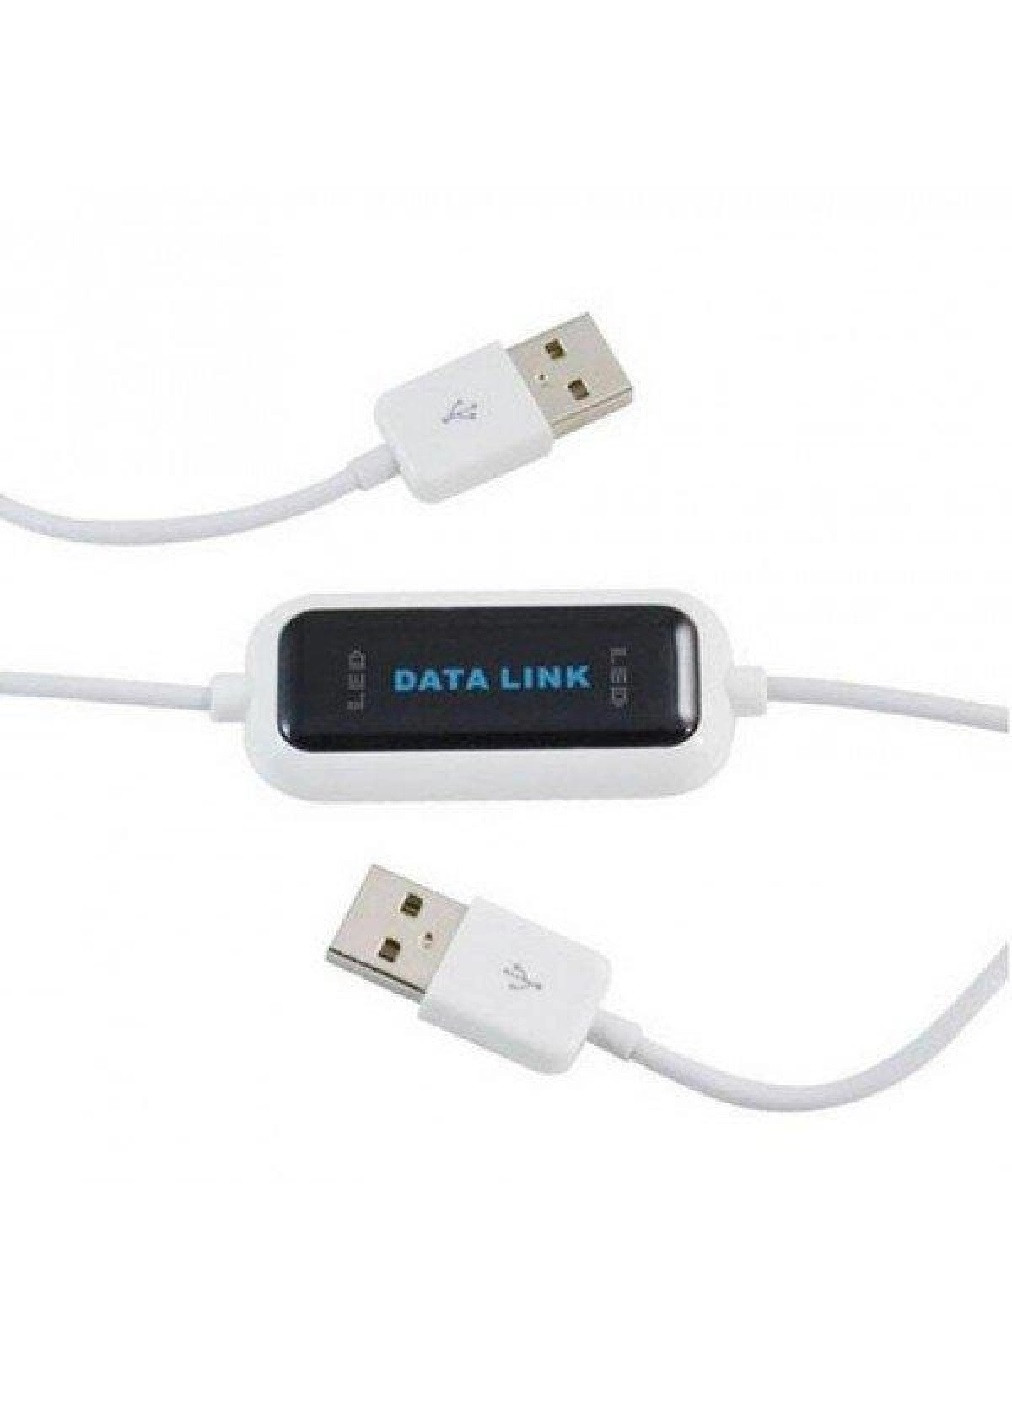 Кабель коннектор DATA LINK для передачи данных между компьютерами по USB 480Mb/s 55 х 27 х 10 мм (474853-Prob) Белый Unbranded (260023485)